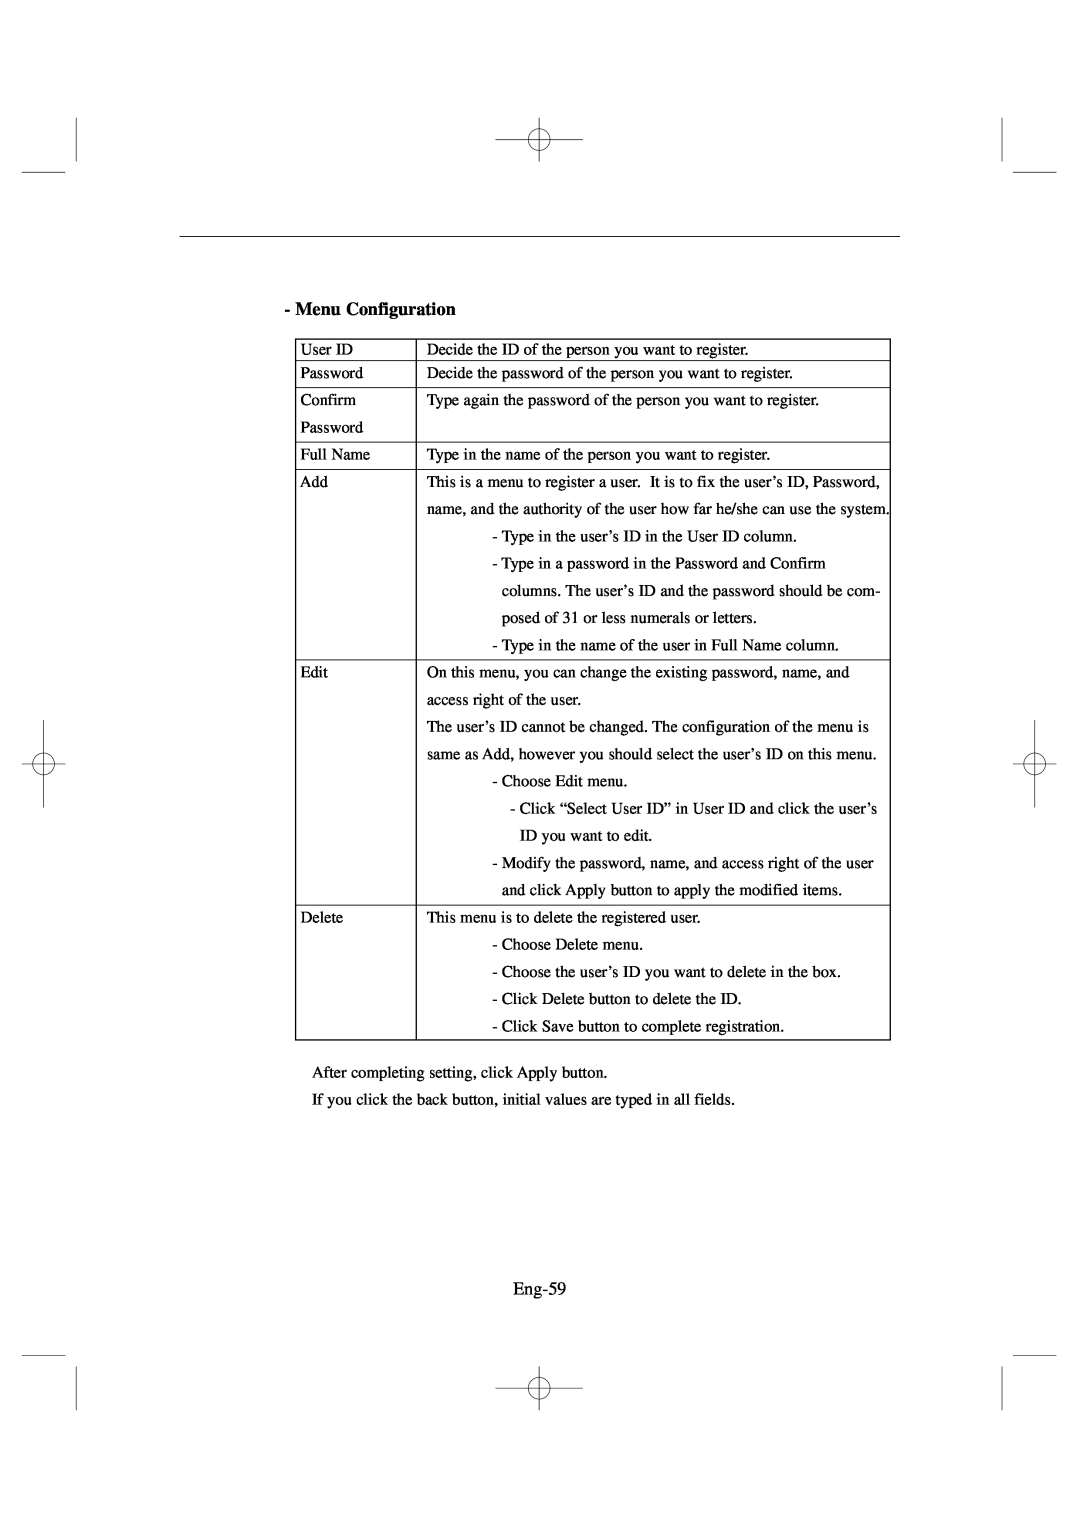 Samsung SSC17WEB manual Menu Configuration, Eng-59 